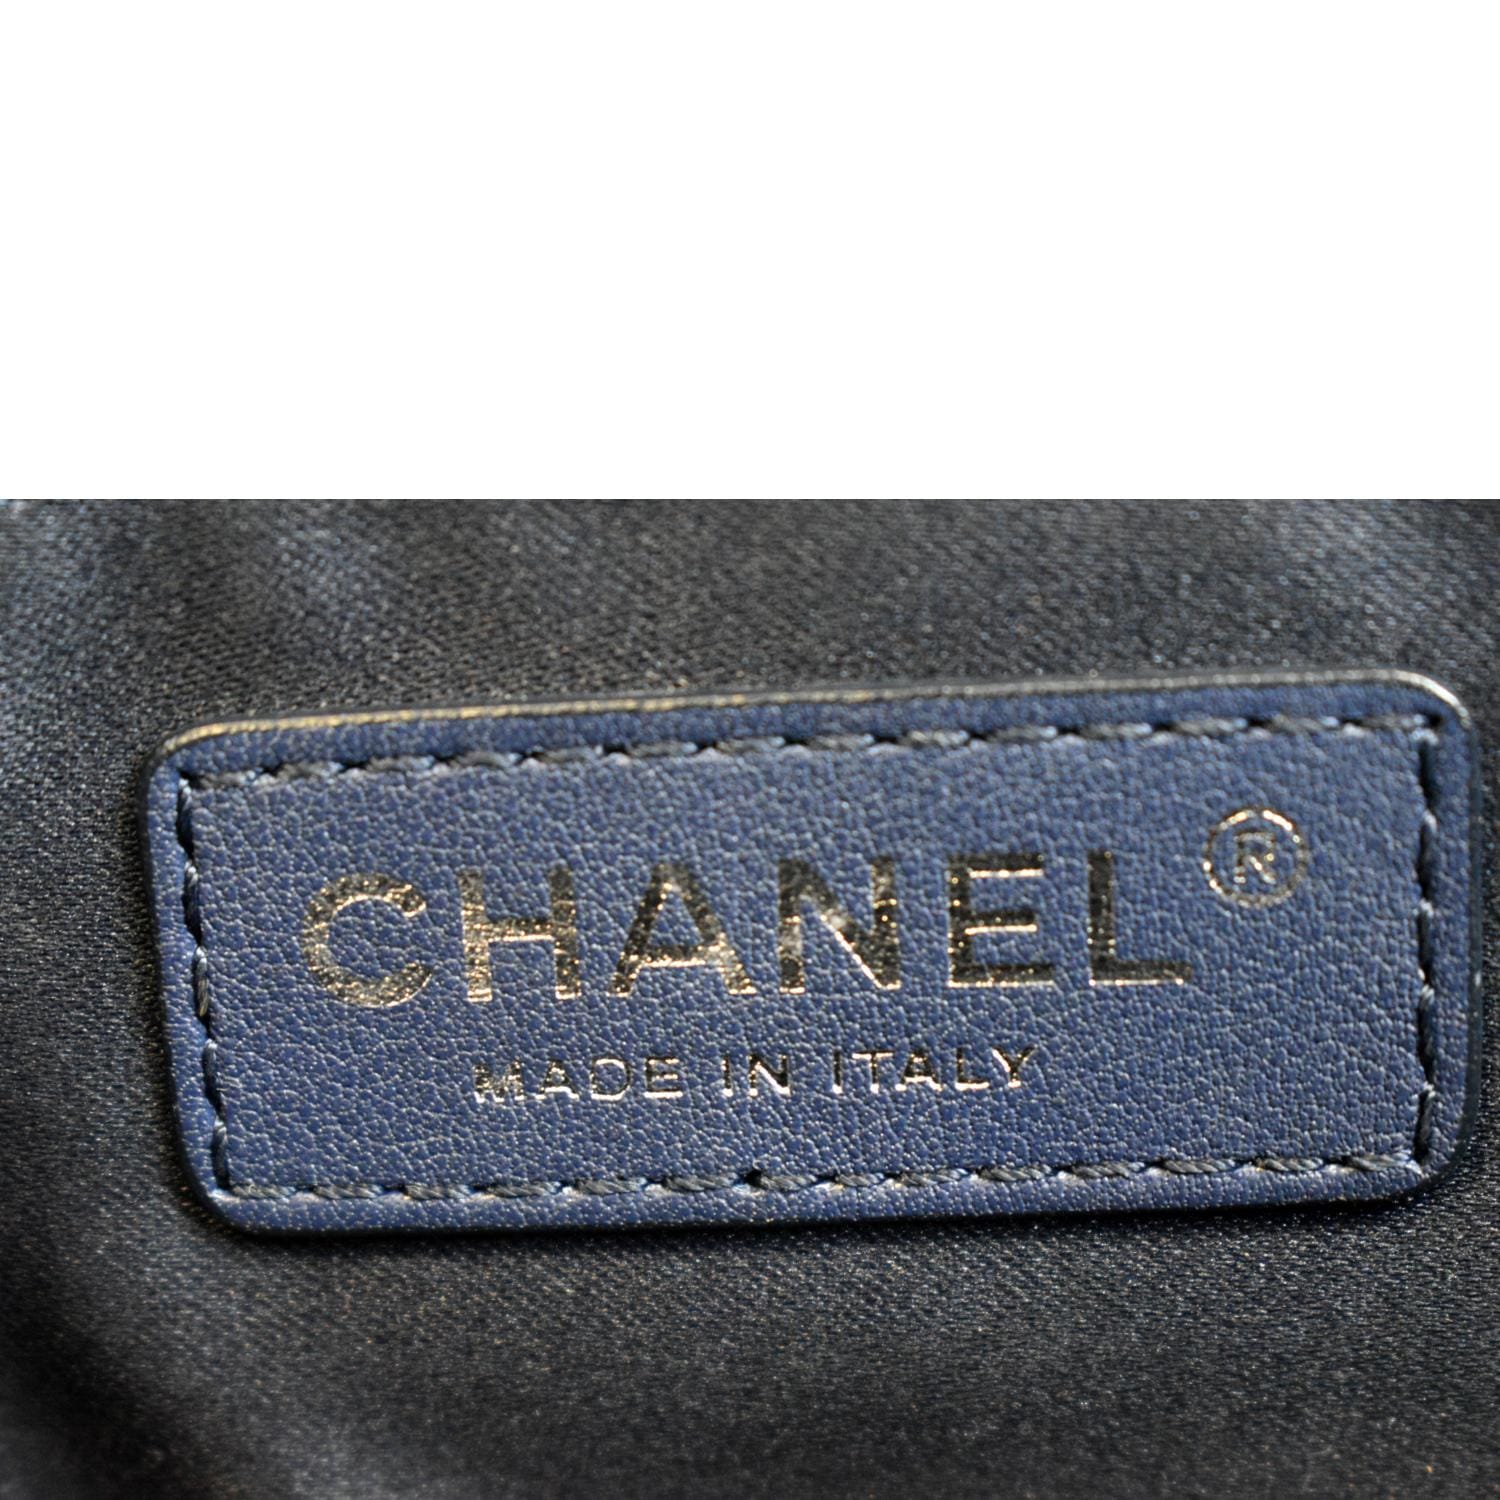 Fashion « Chanel-Vuitton », Sale n°2089, Lot n°91